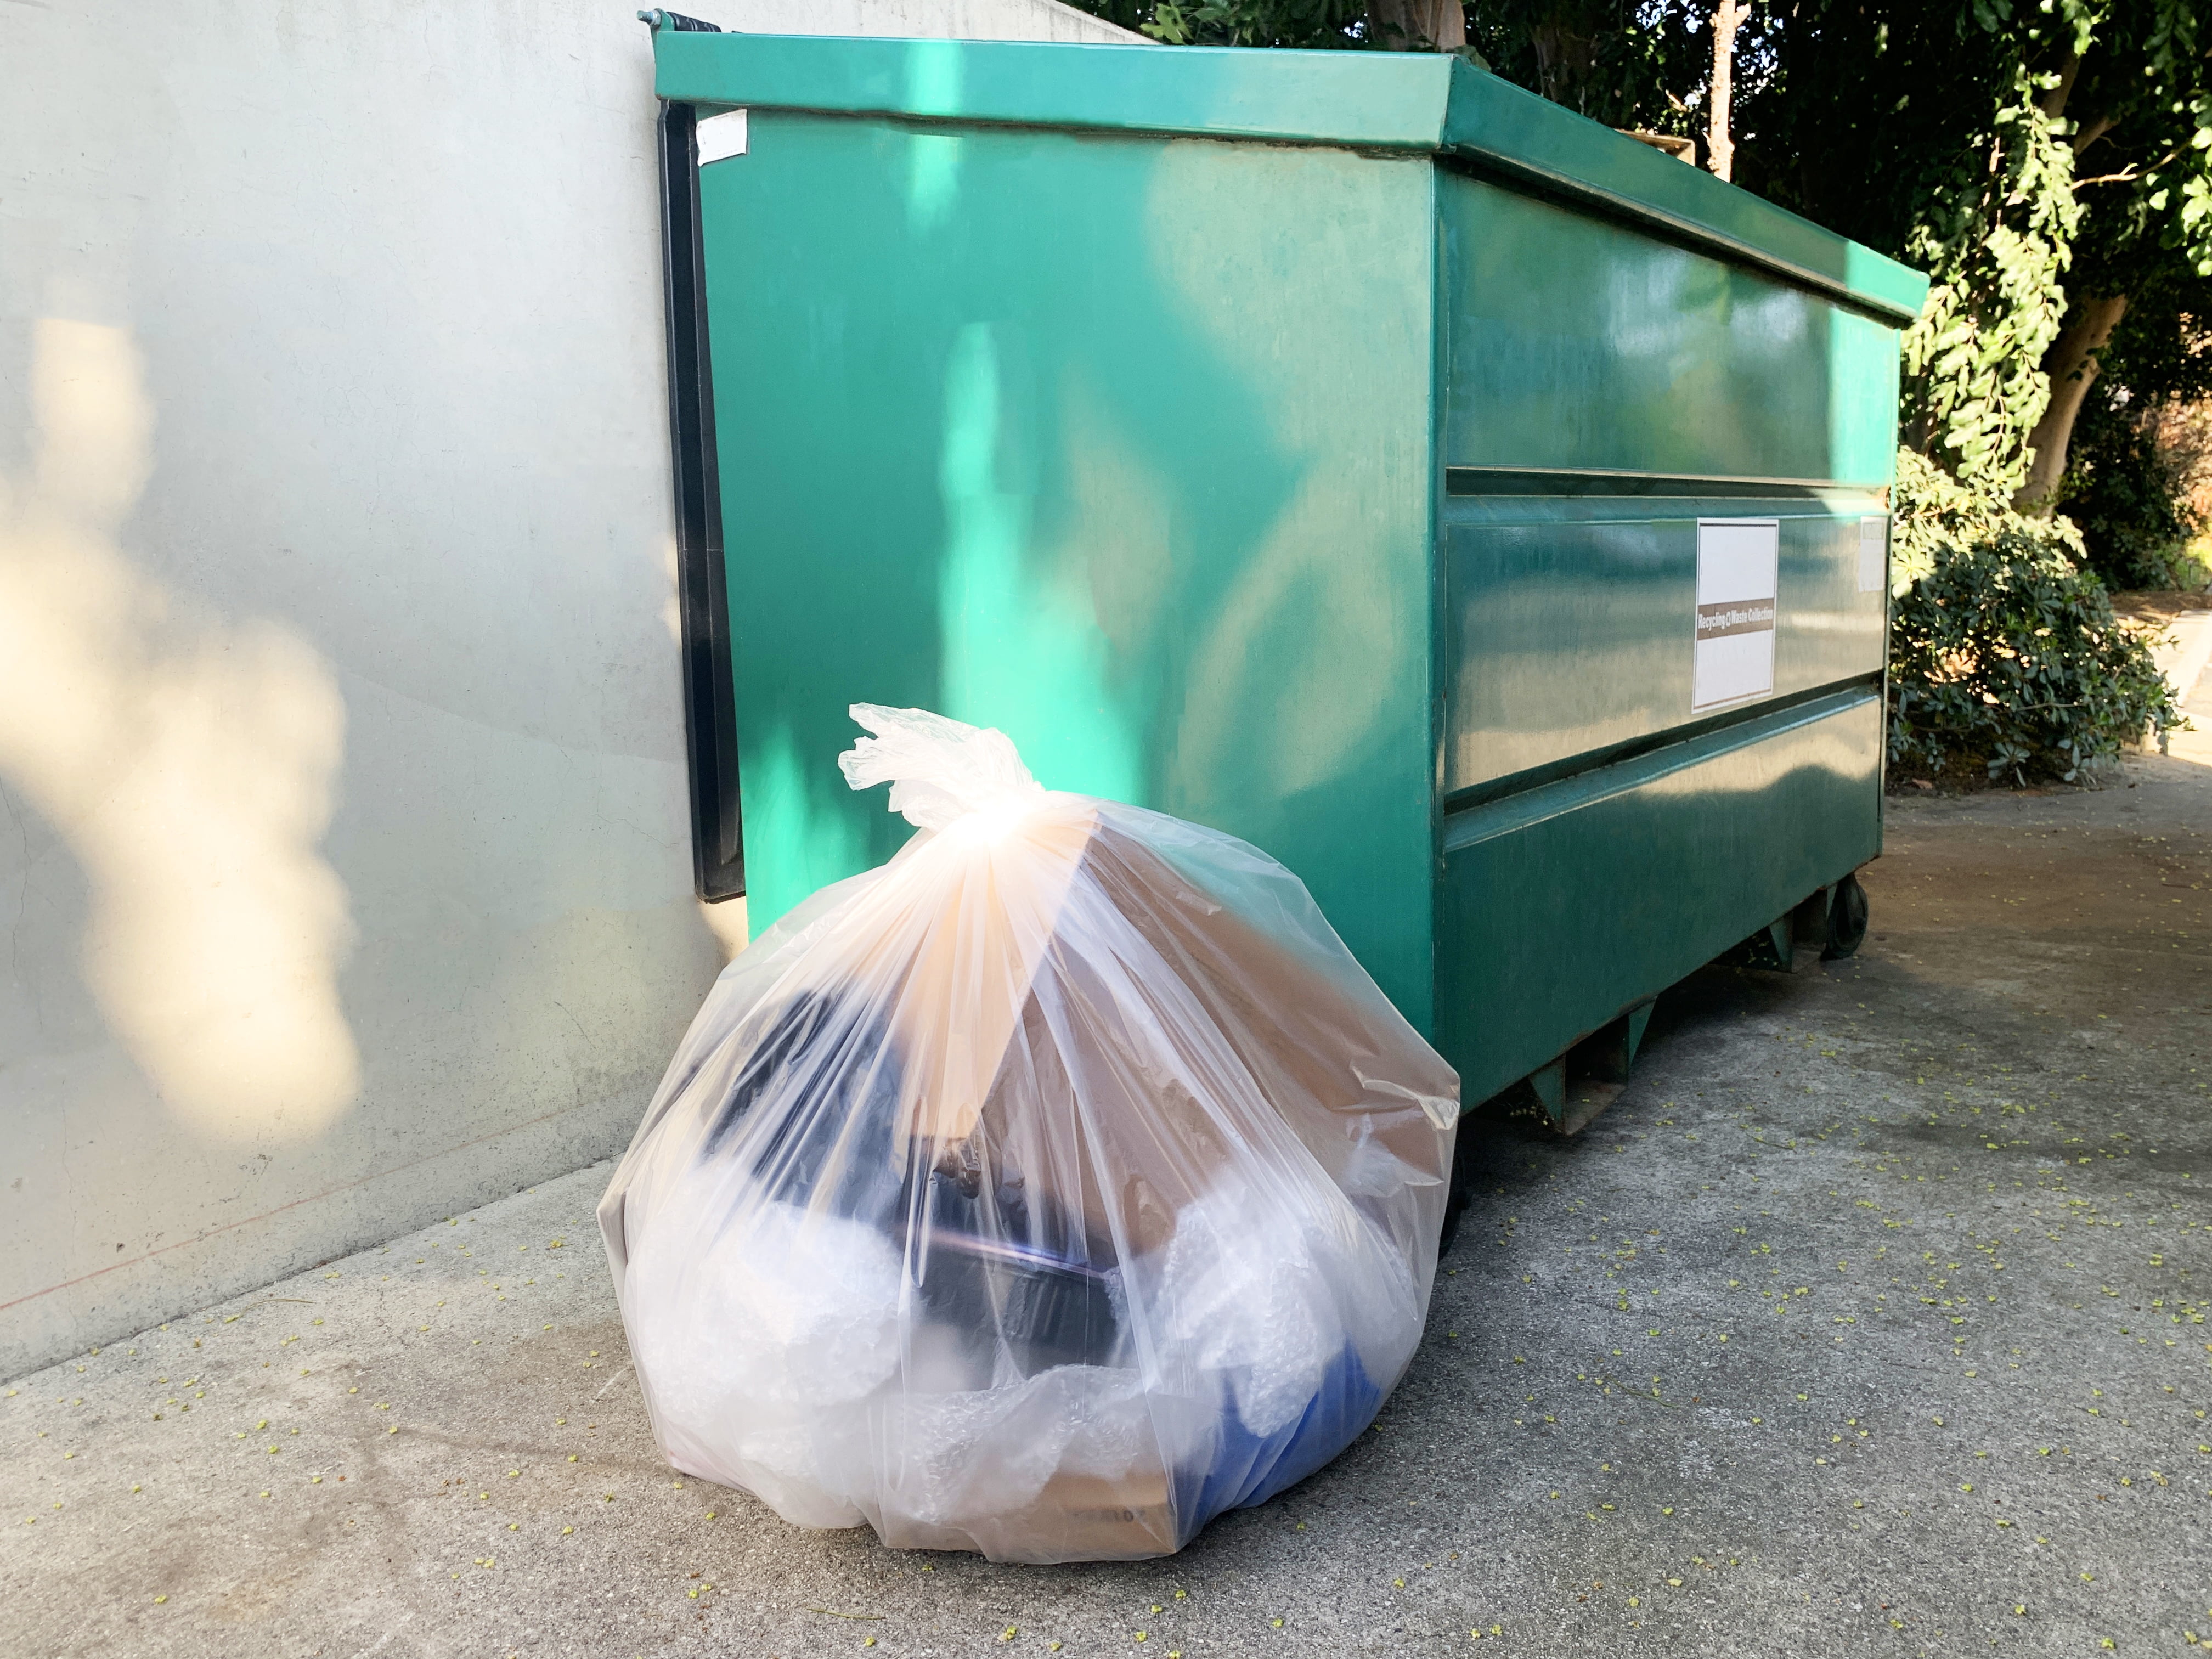 Ruibeauty 60pcs Trash Bags,2 Gallon Handle Garbage Bags Trash Can Liners Bathroom, Bedroom, Office, Car, Home Waste Bin Plastic Trash Can Liners